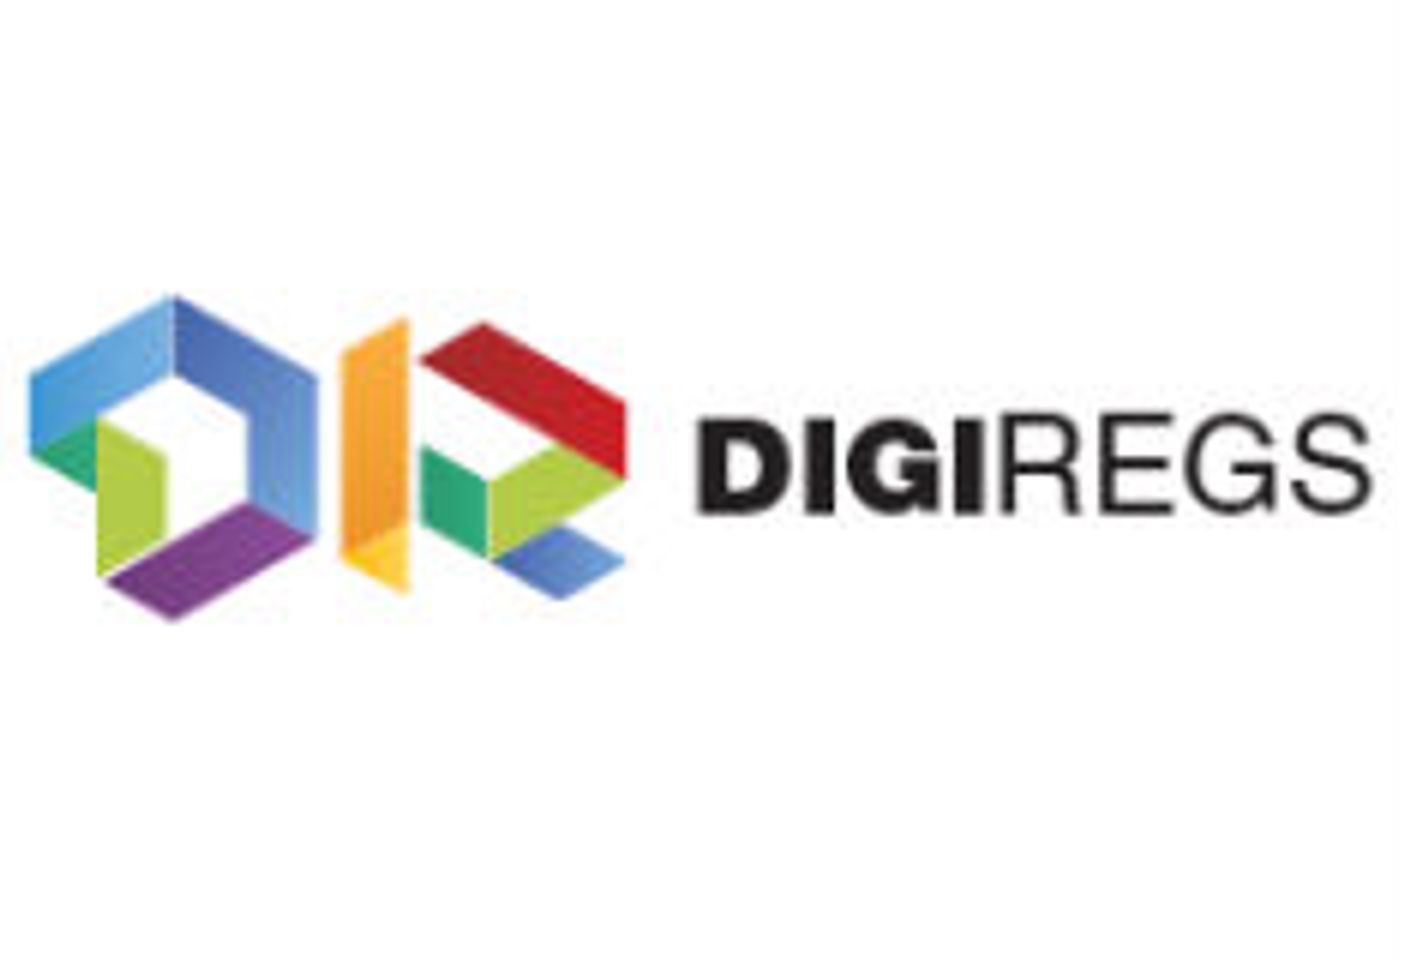 DigiRegs Content Management & Protection Makes European Debut